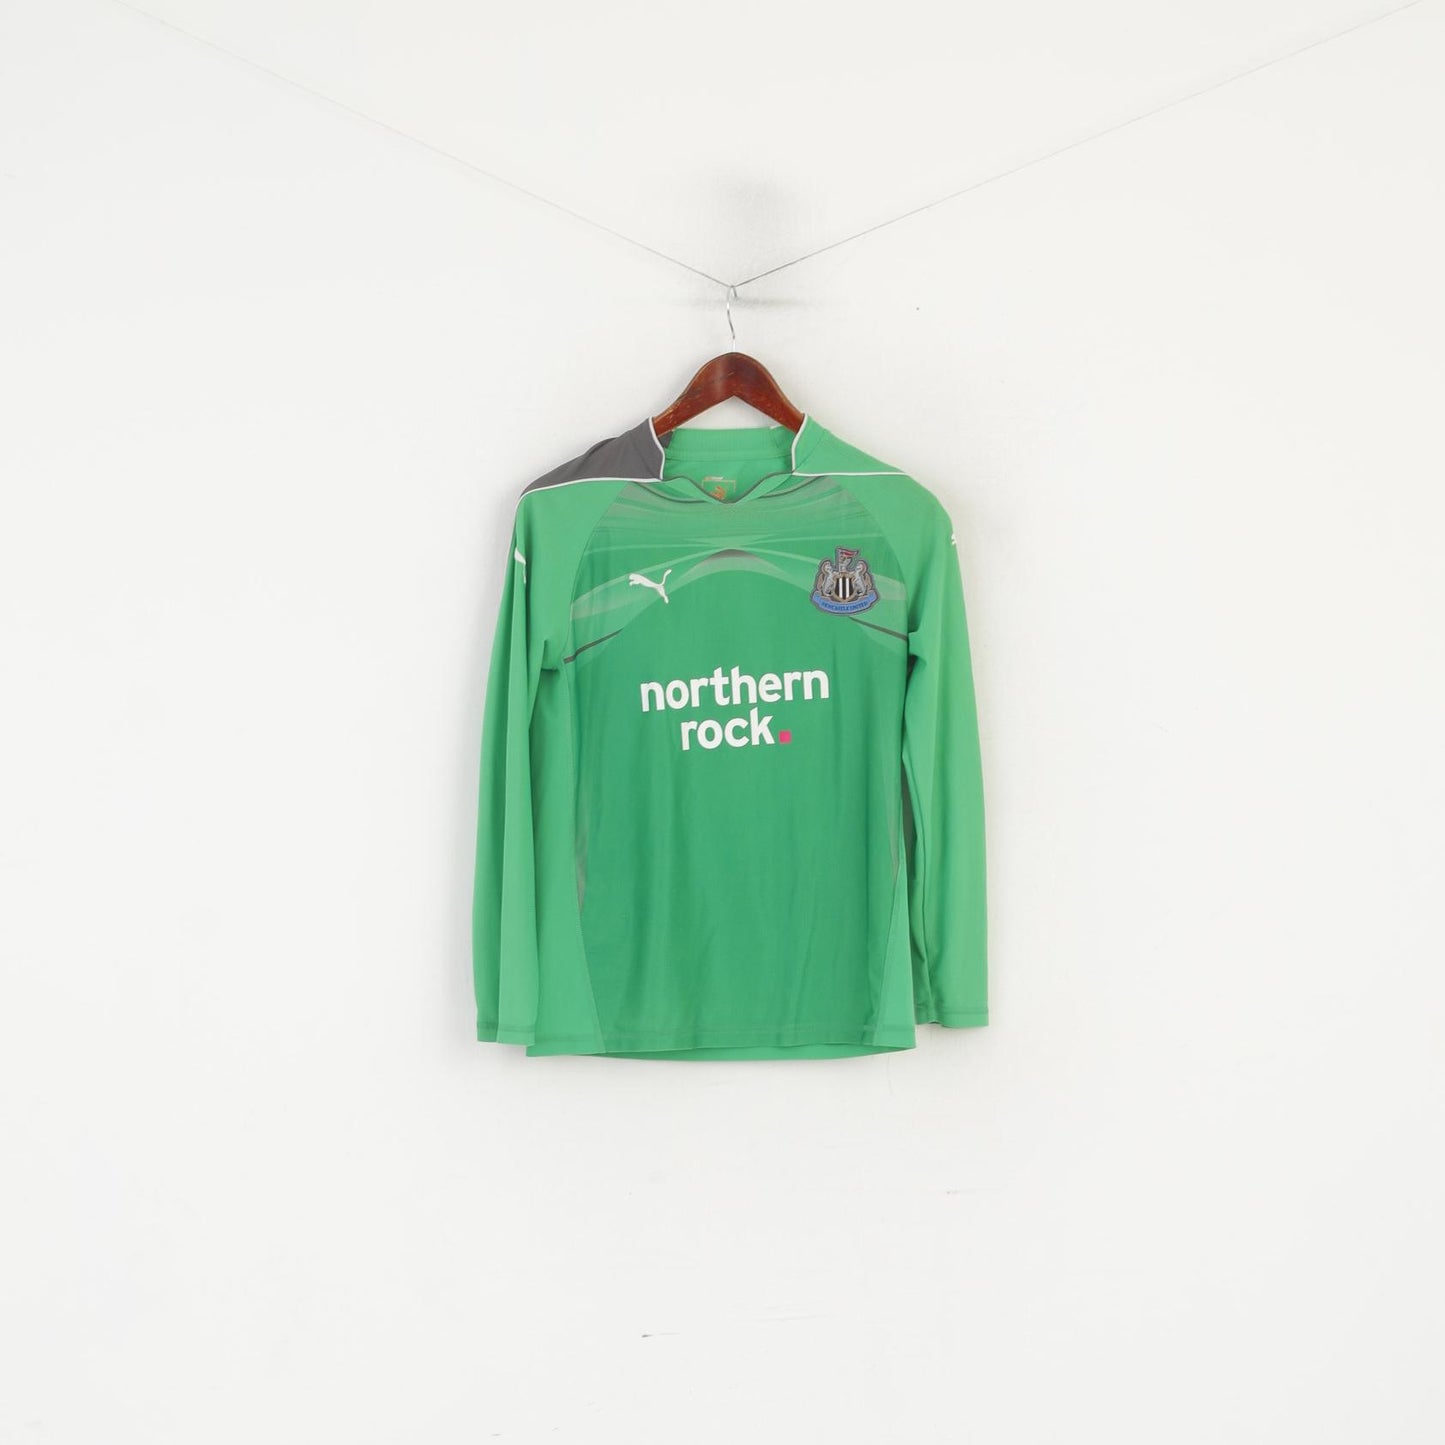 Puma Newcastle United Boys 152 Shirt Green Long Sleeve Football Club Jersey Top